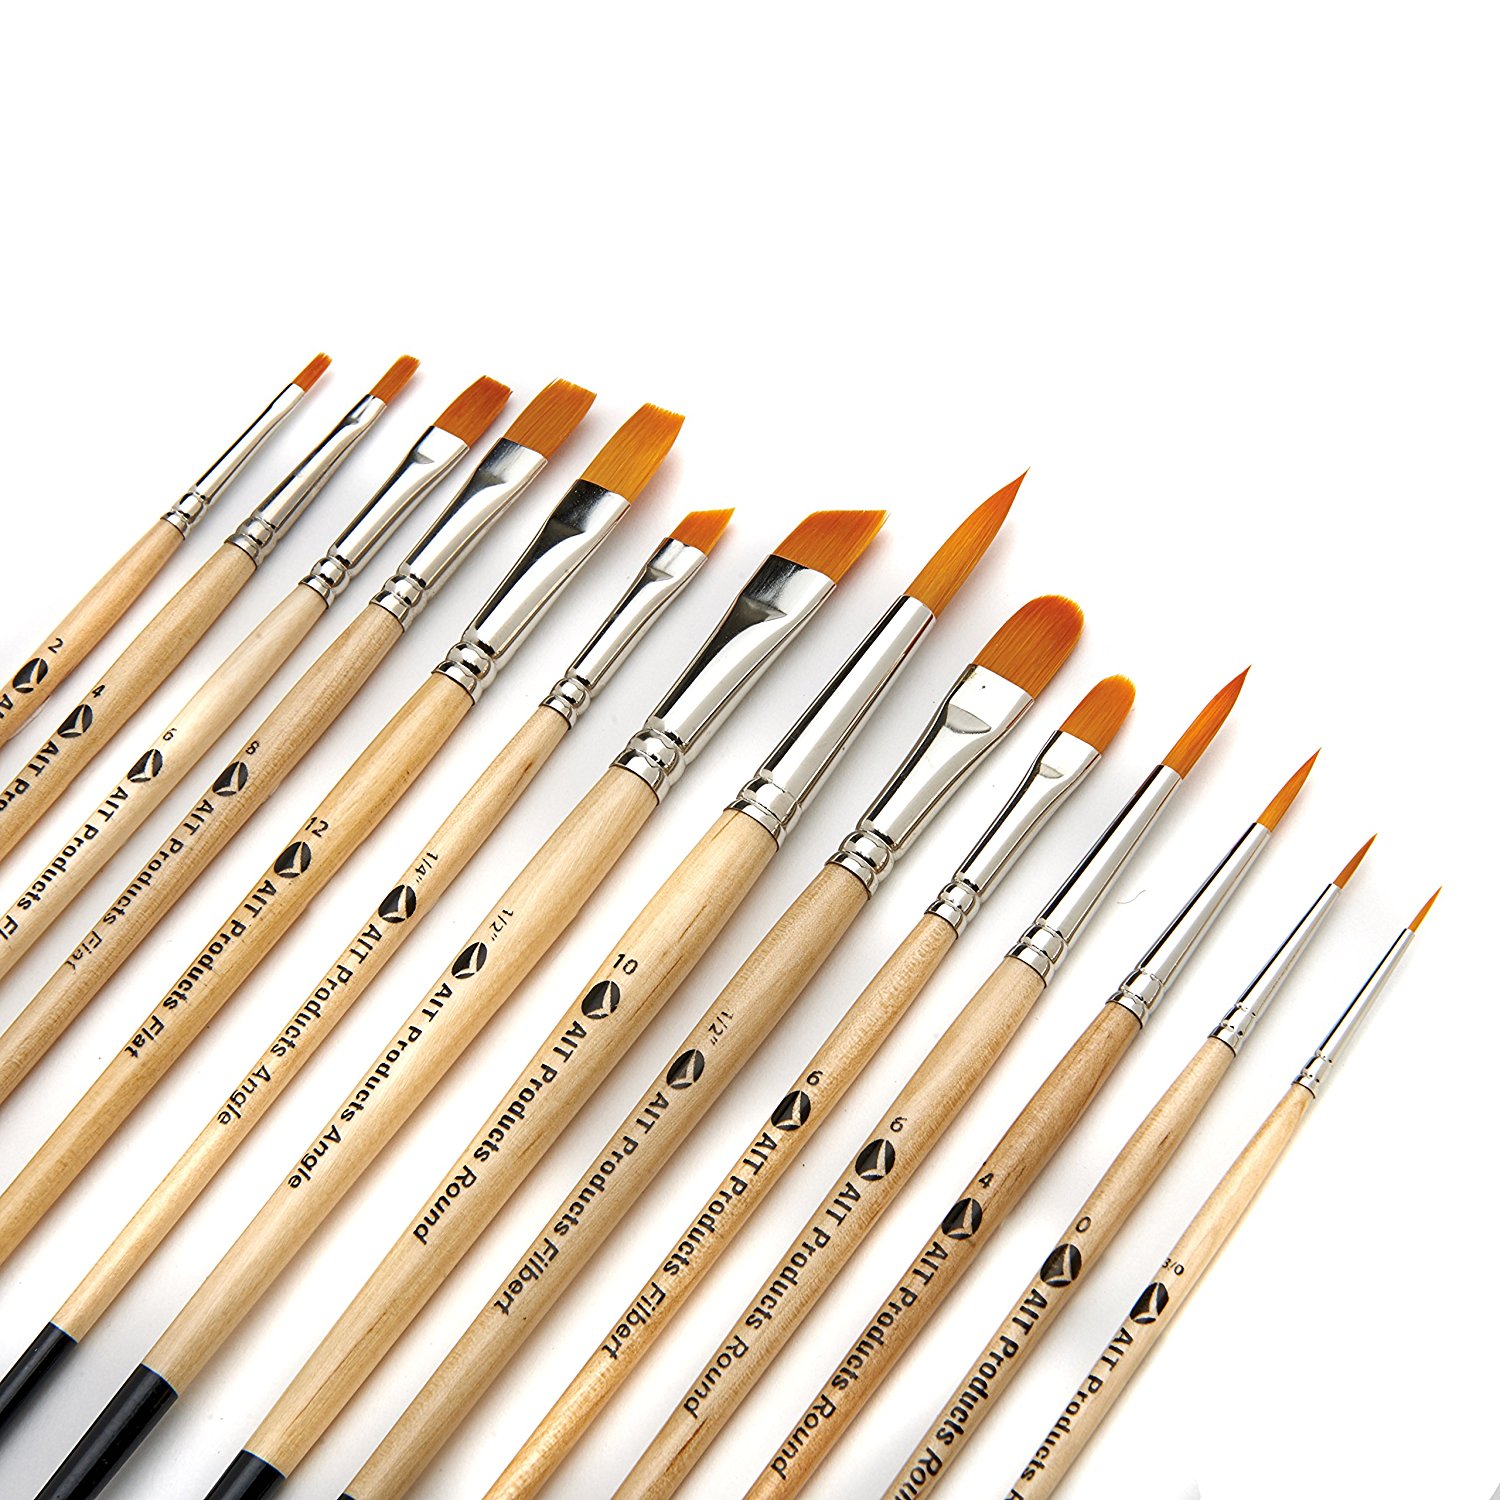 Amazon.com: AIT Art Paint Brush Set - 14 Paint Brushes - Rounds ...